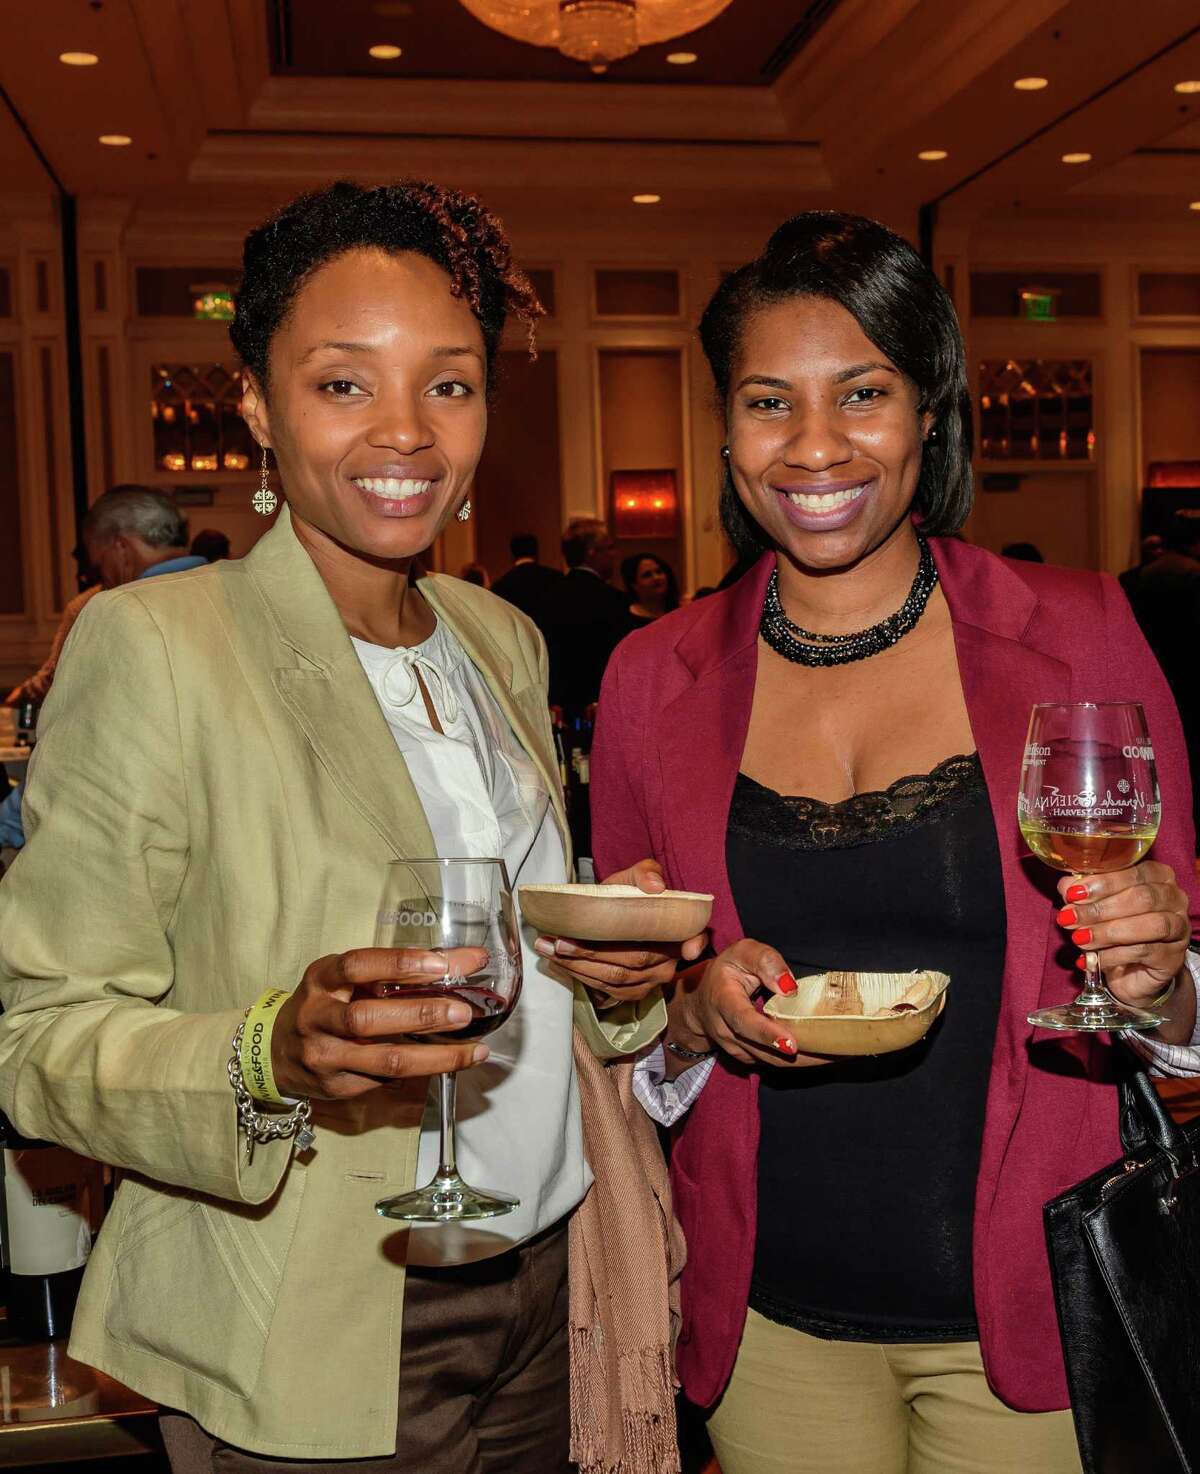 Nona King and Sheridan Labbe enjoy the Sugar Land Wine & Food Affair's Grand Tasting held in the Sugar Land Marriott ballroom, 04/07/17.